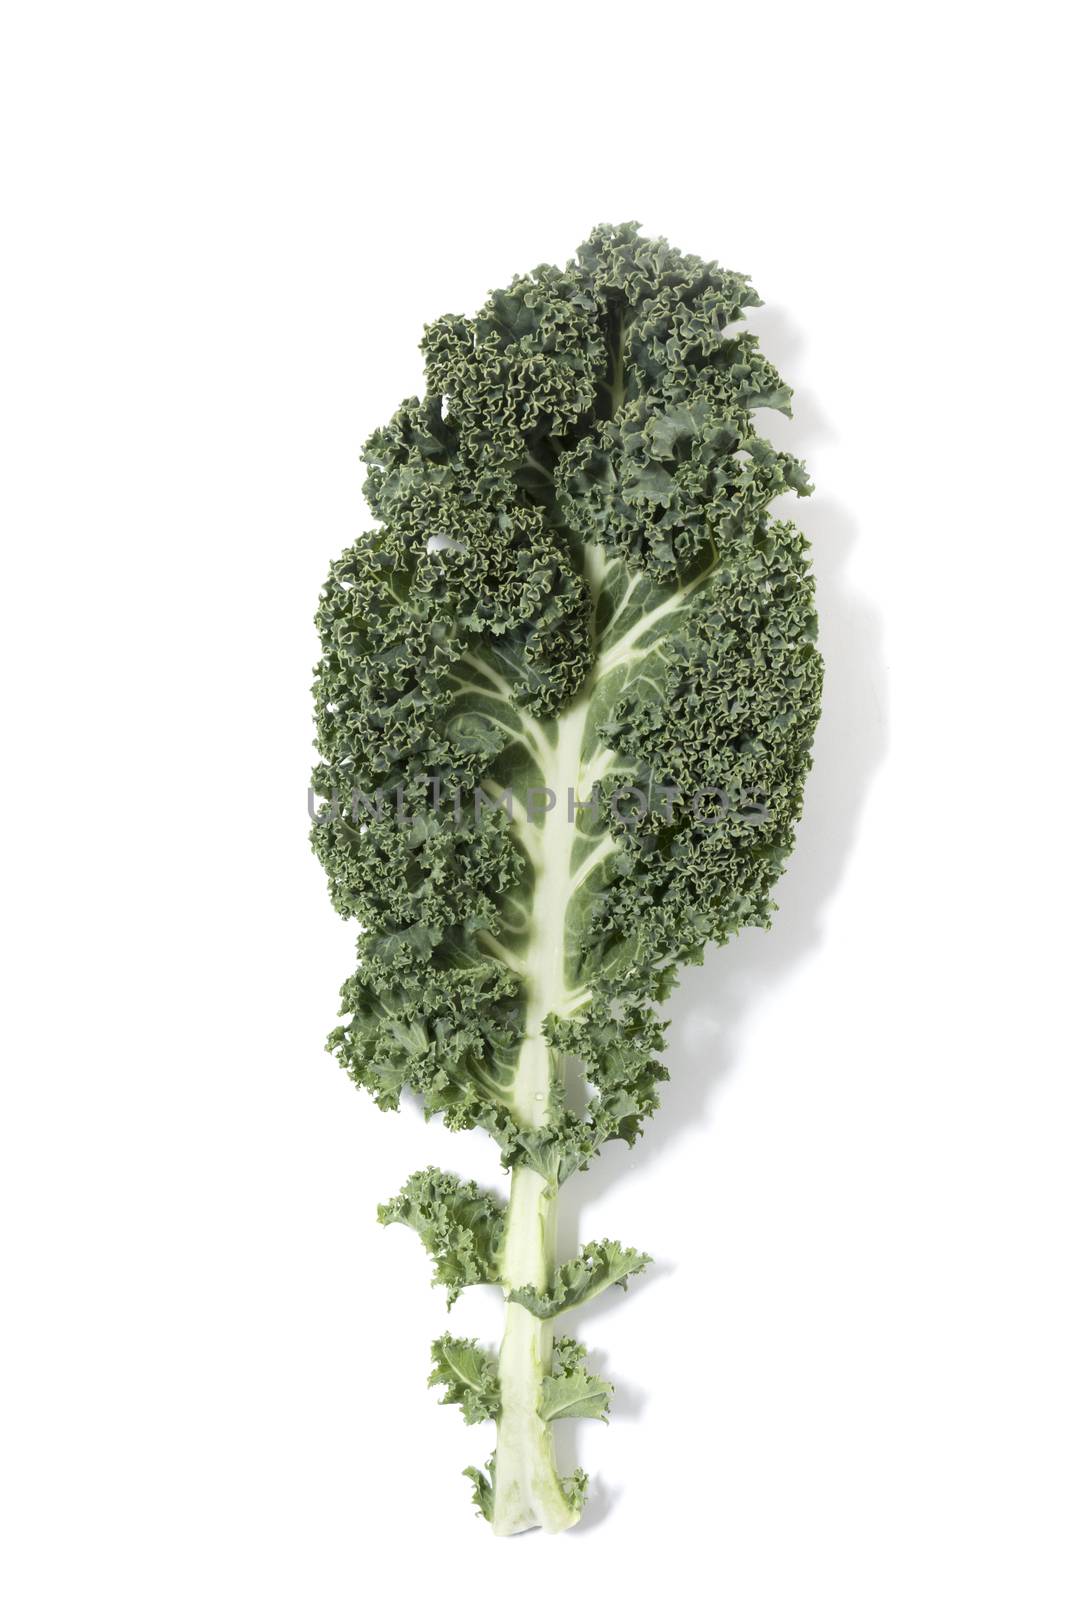 Curly leaf kale by membio